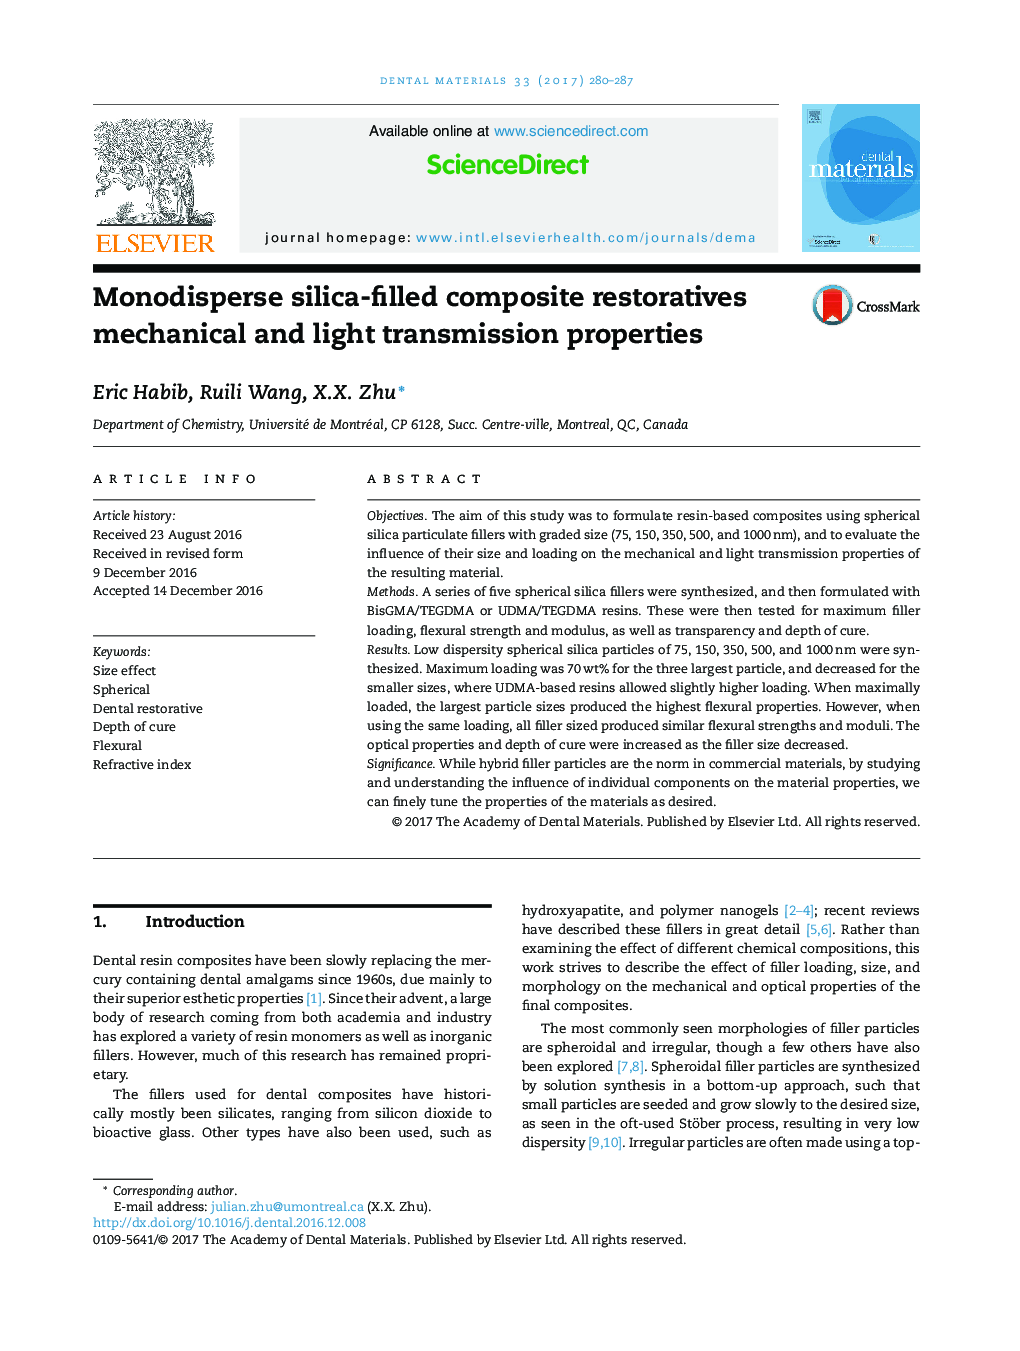 Monodisperse silica-filled composite restoratives mechanical and light transmission properties